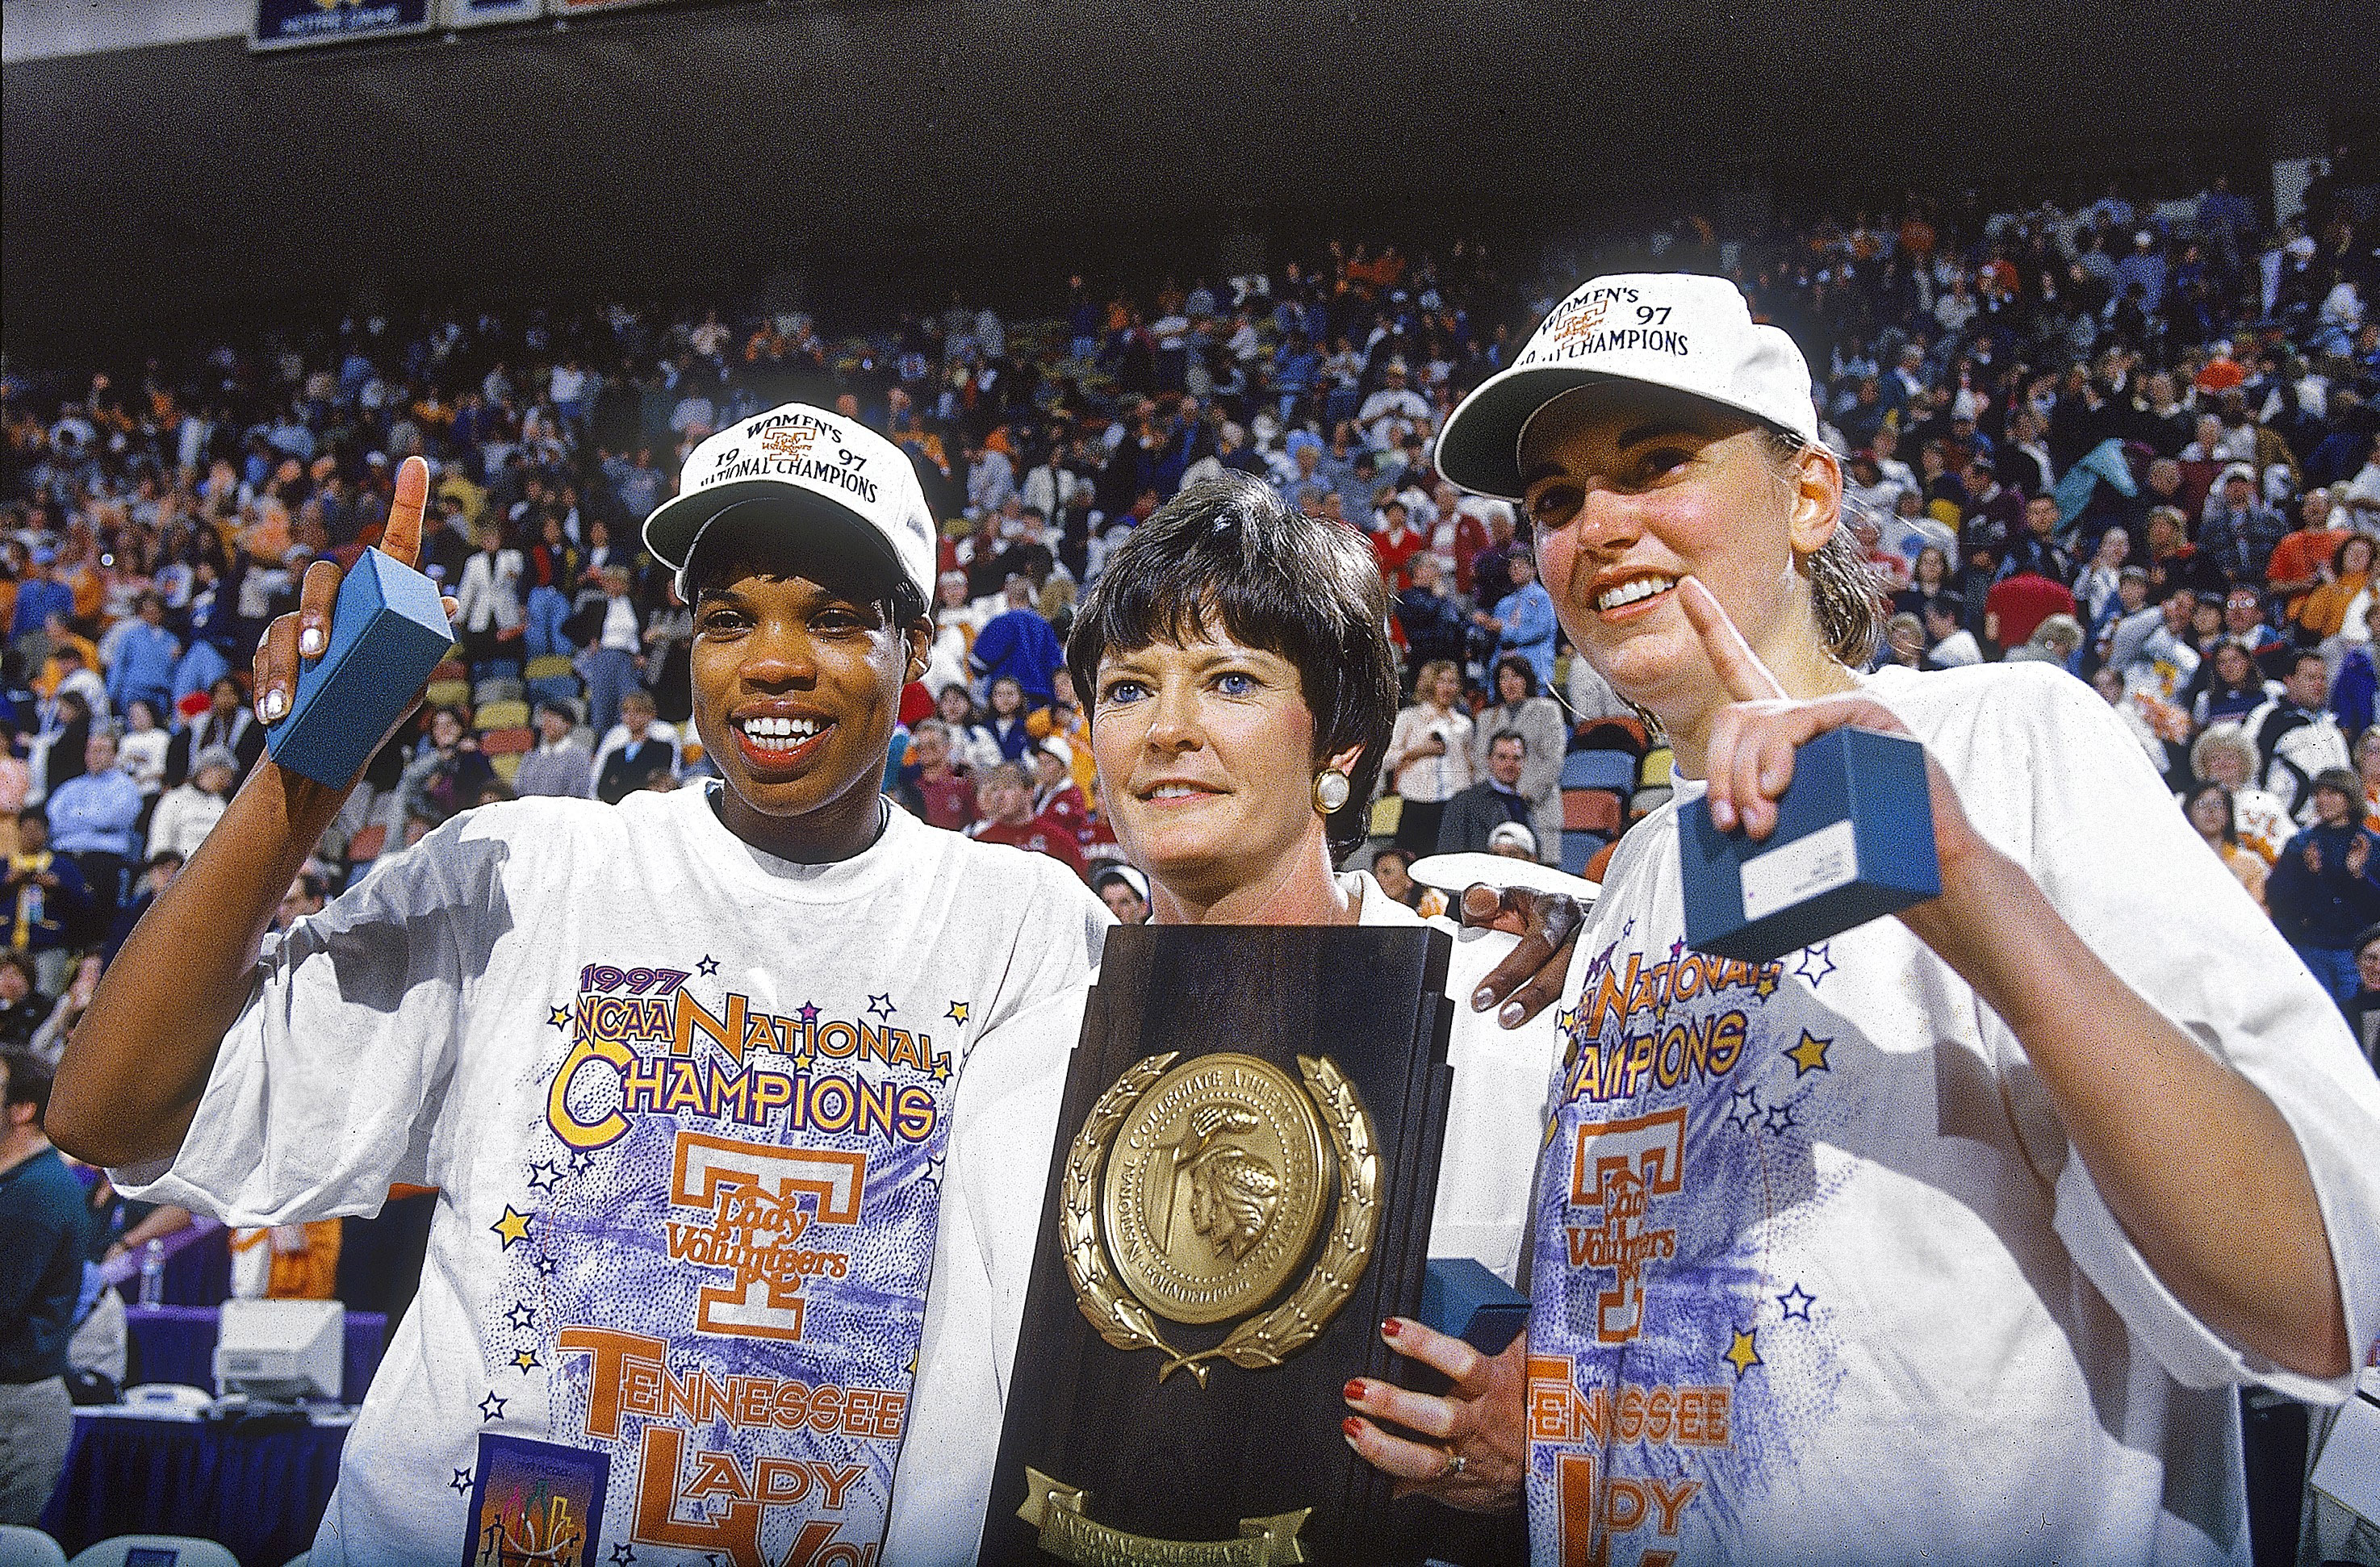 1997 NCAA championship, Pat Summitt, Tennessee Vols basketball